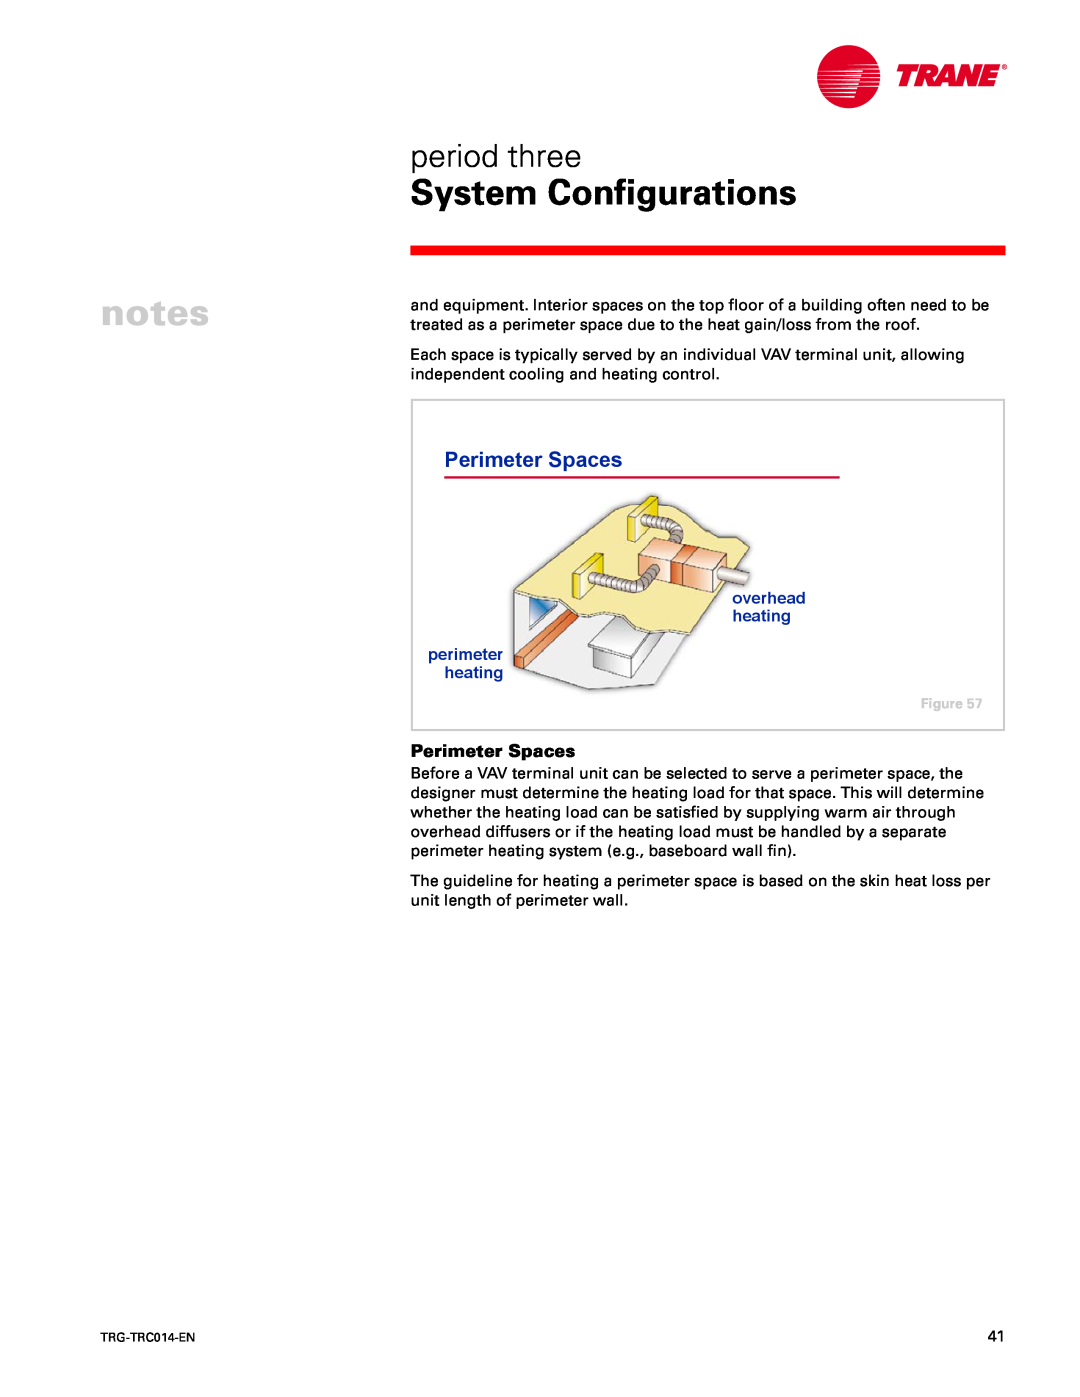 Trane TRG-TRC014-EN manual period three, Perimeter Spaces, System Configurations, overhead heating perimeter heating 